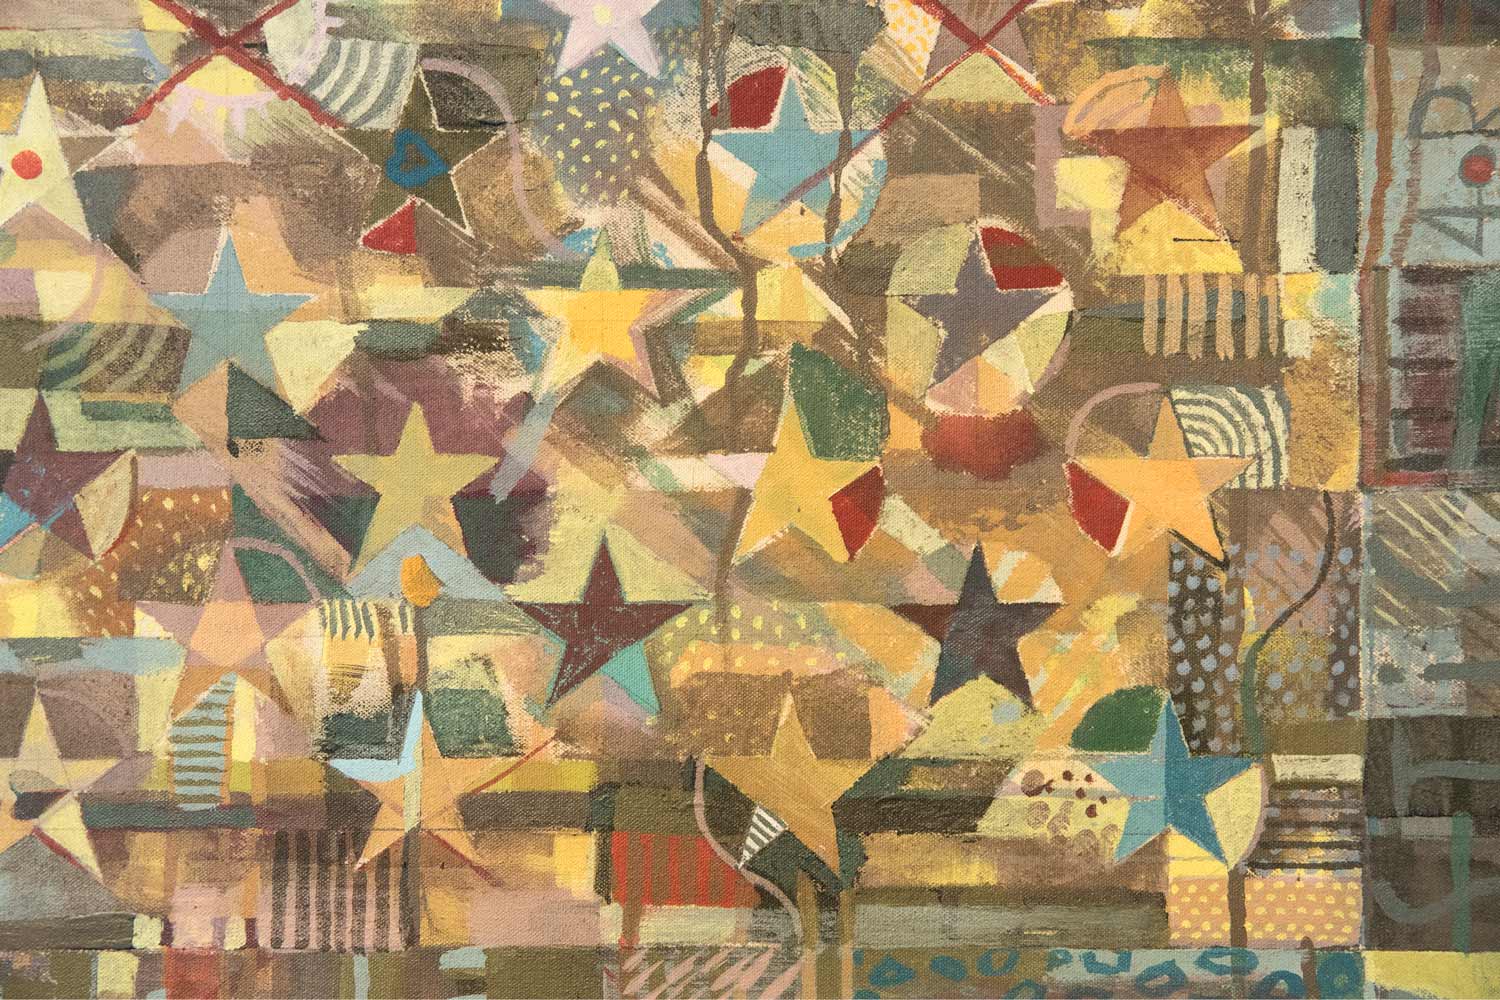 Painting of stars